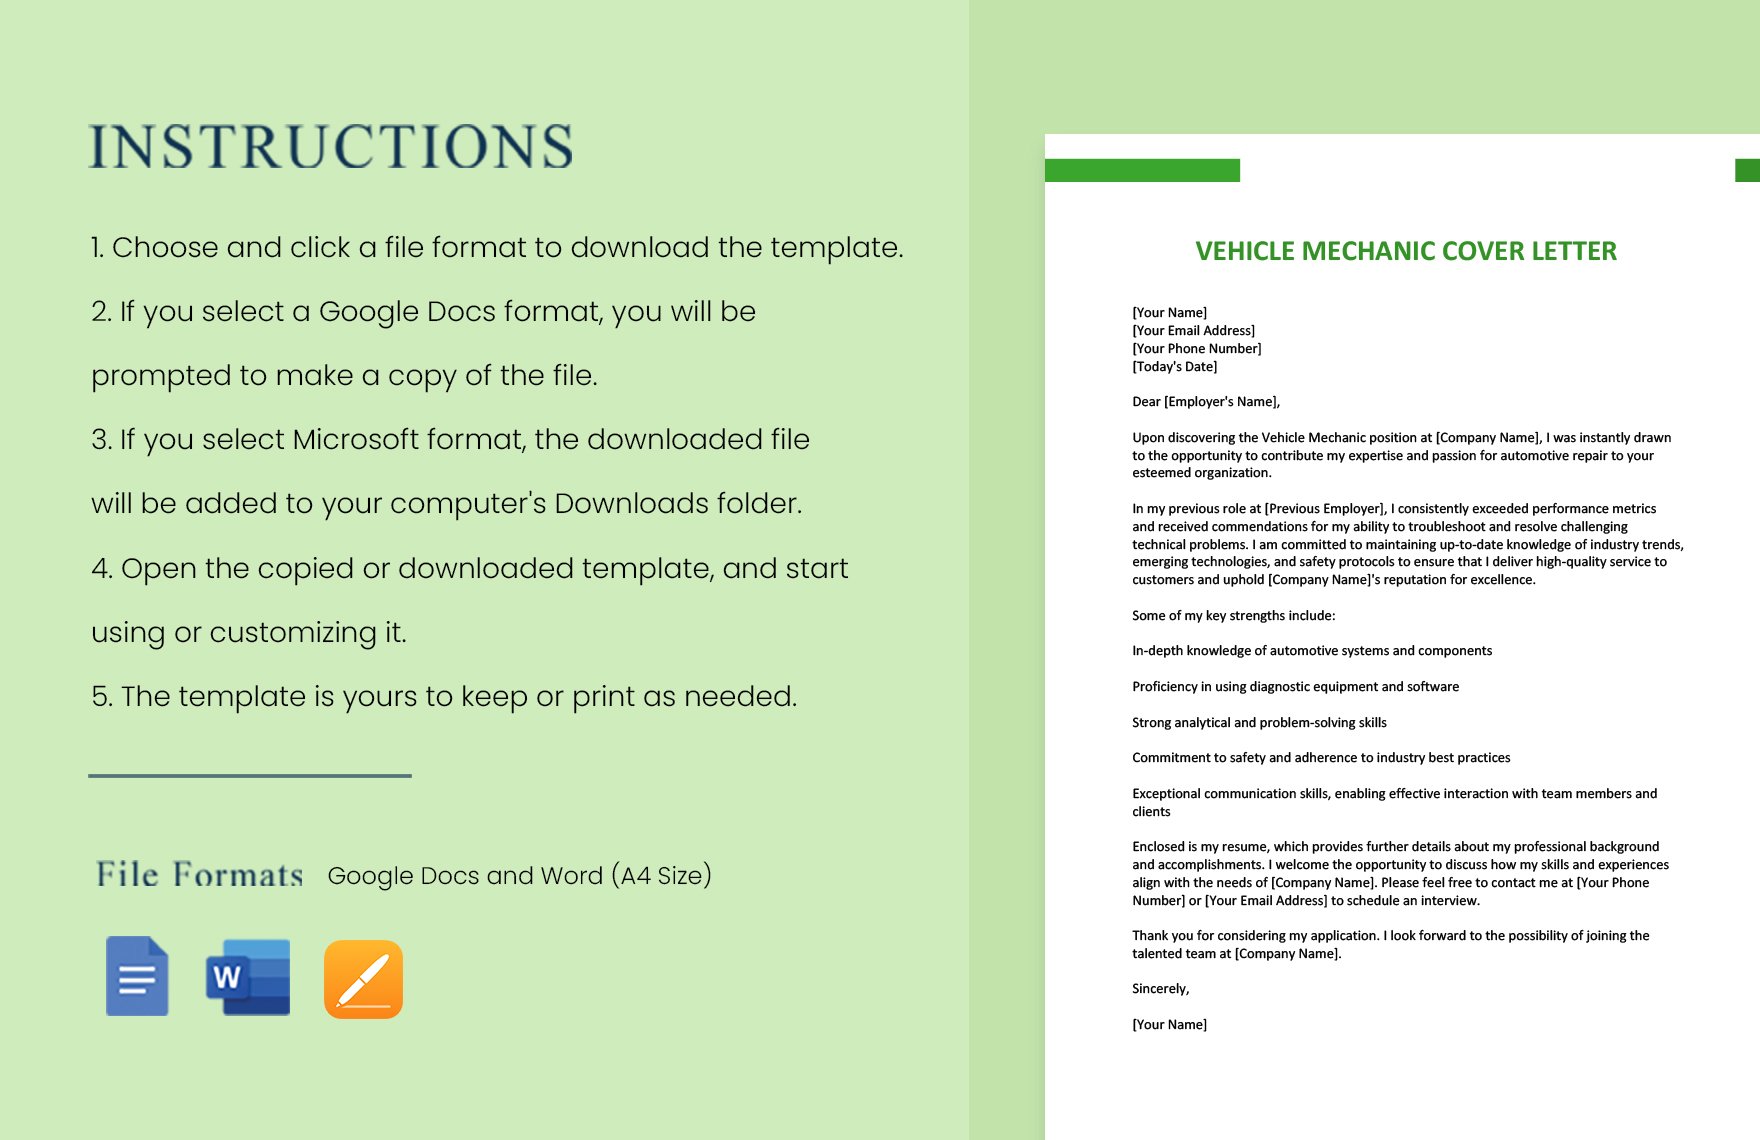 Vehicle Mechanic Cover Letter